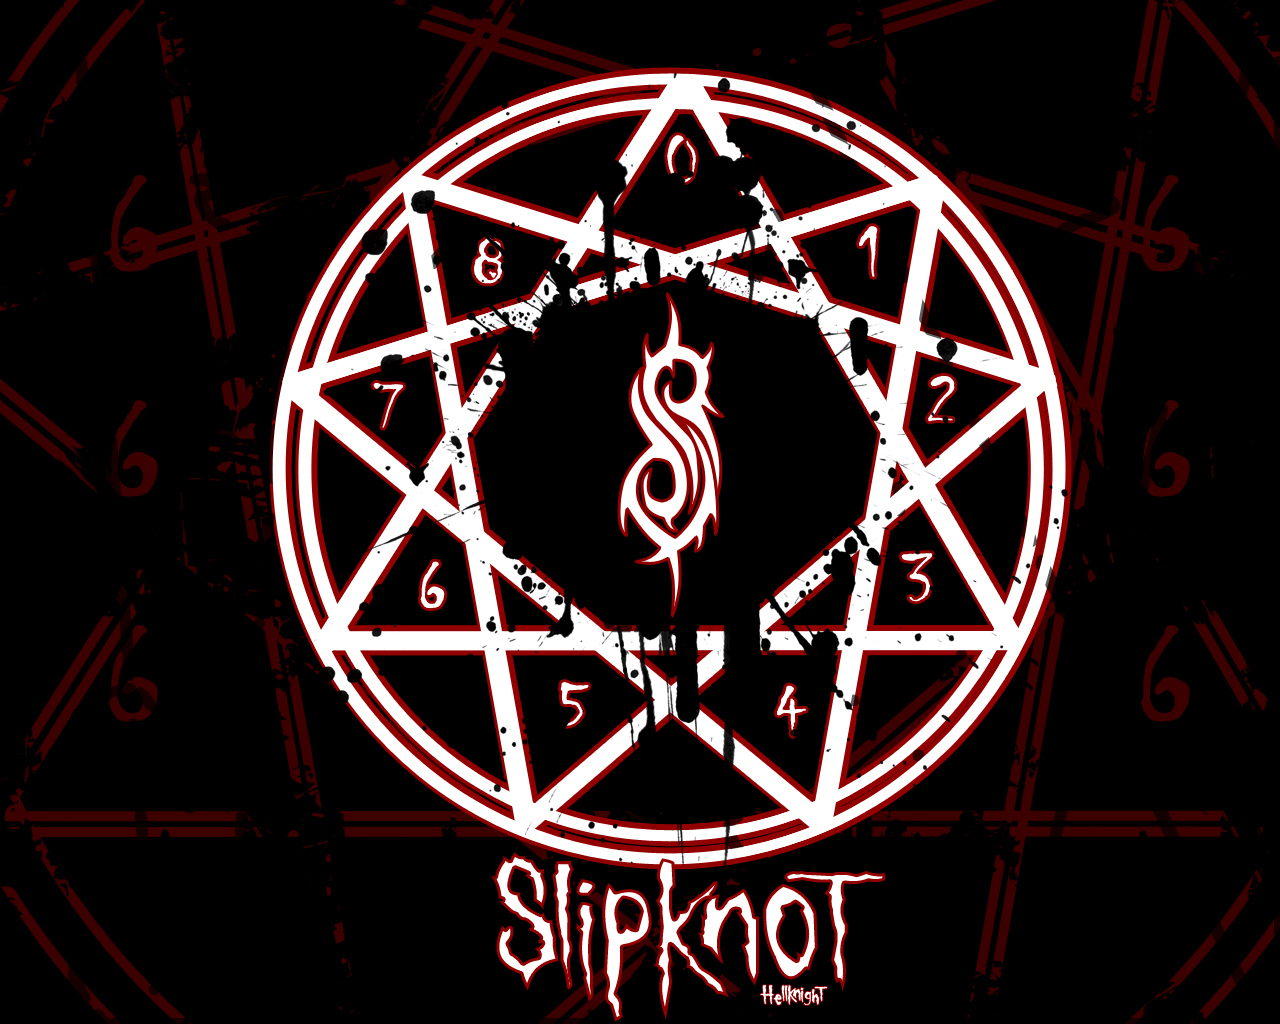 Metal Gods Image Slipknot S Logo HD Wallpaper And Background Photos